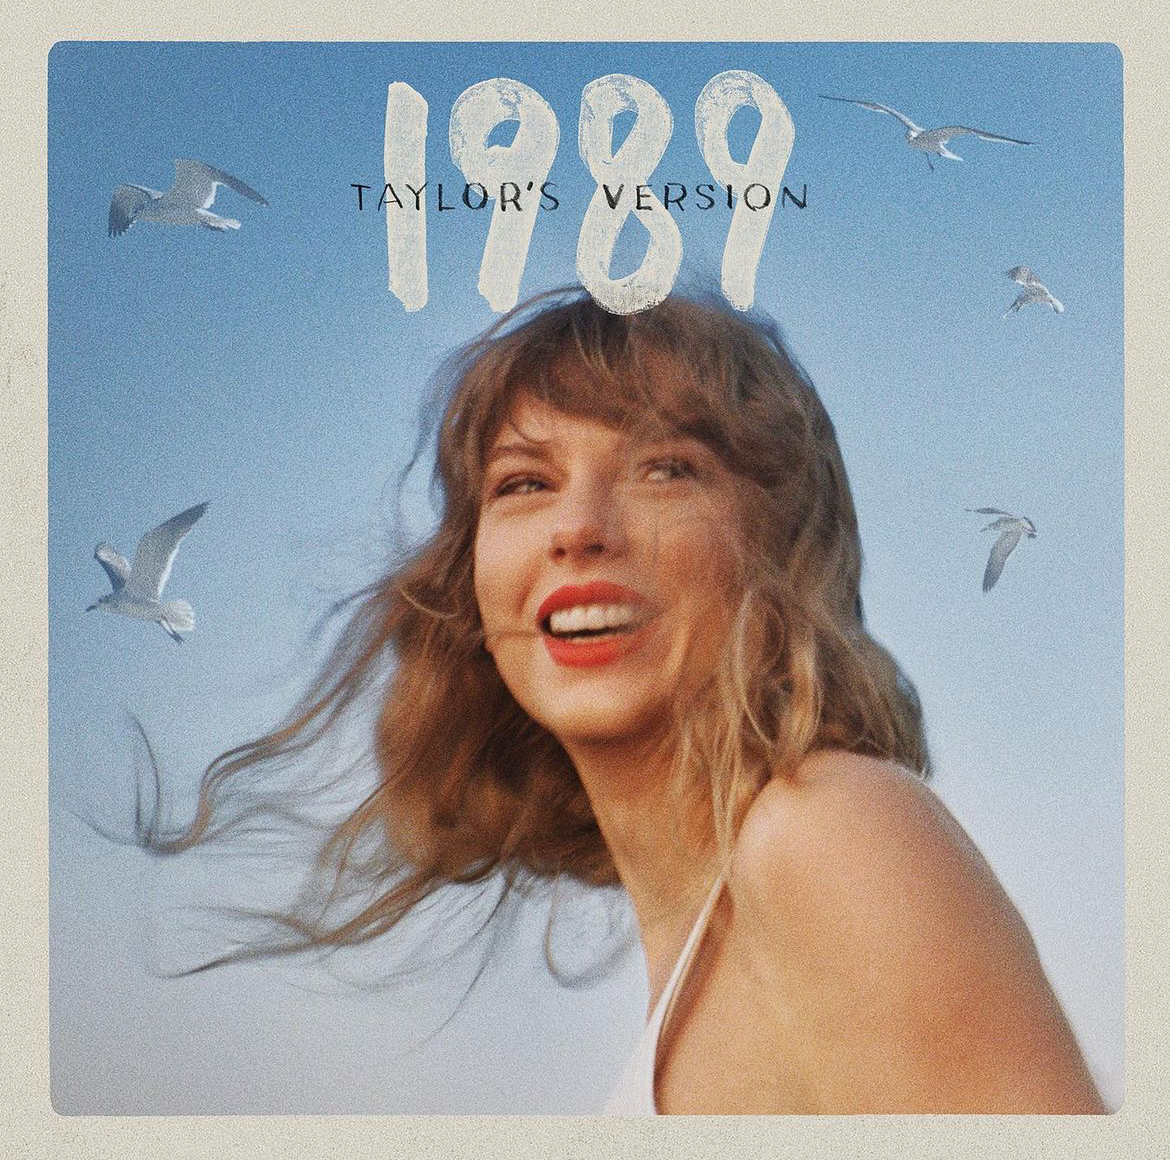 Taylor Swift’s album 1989 (Taylors’ Version).